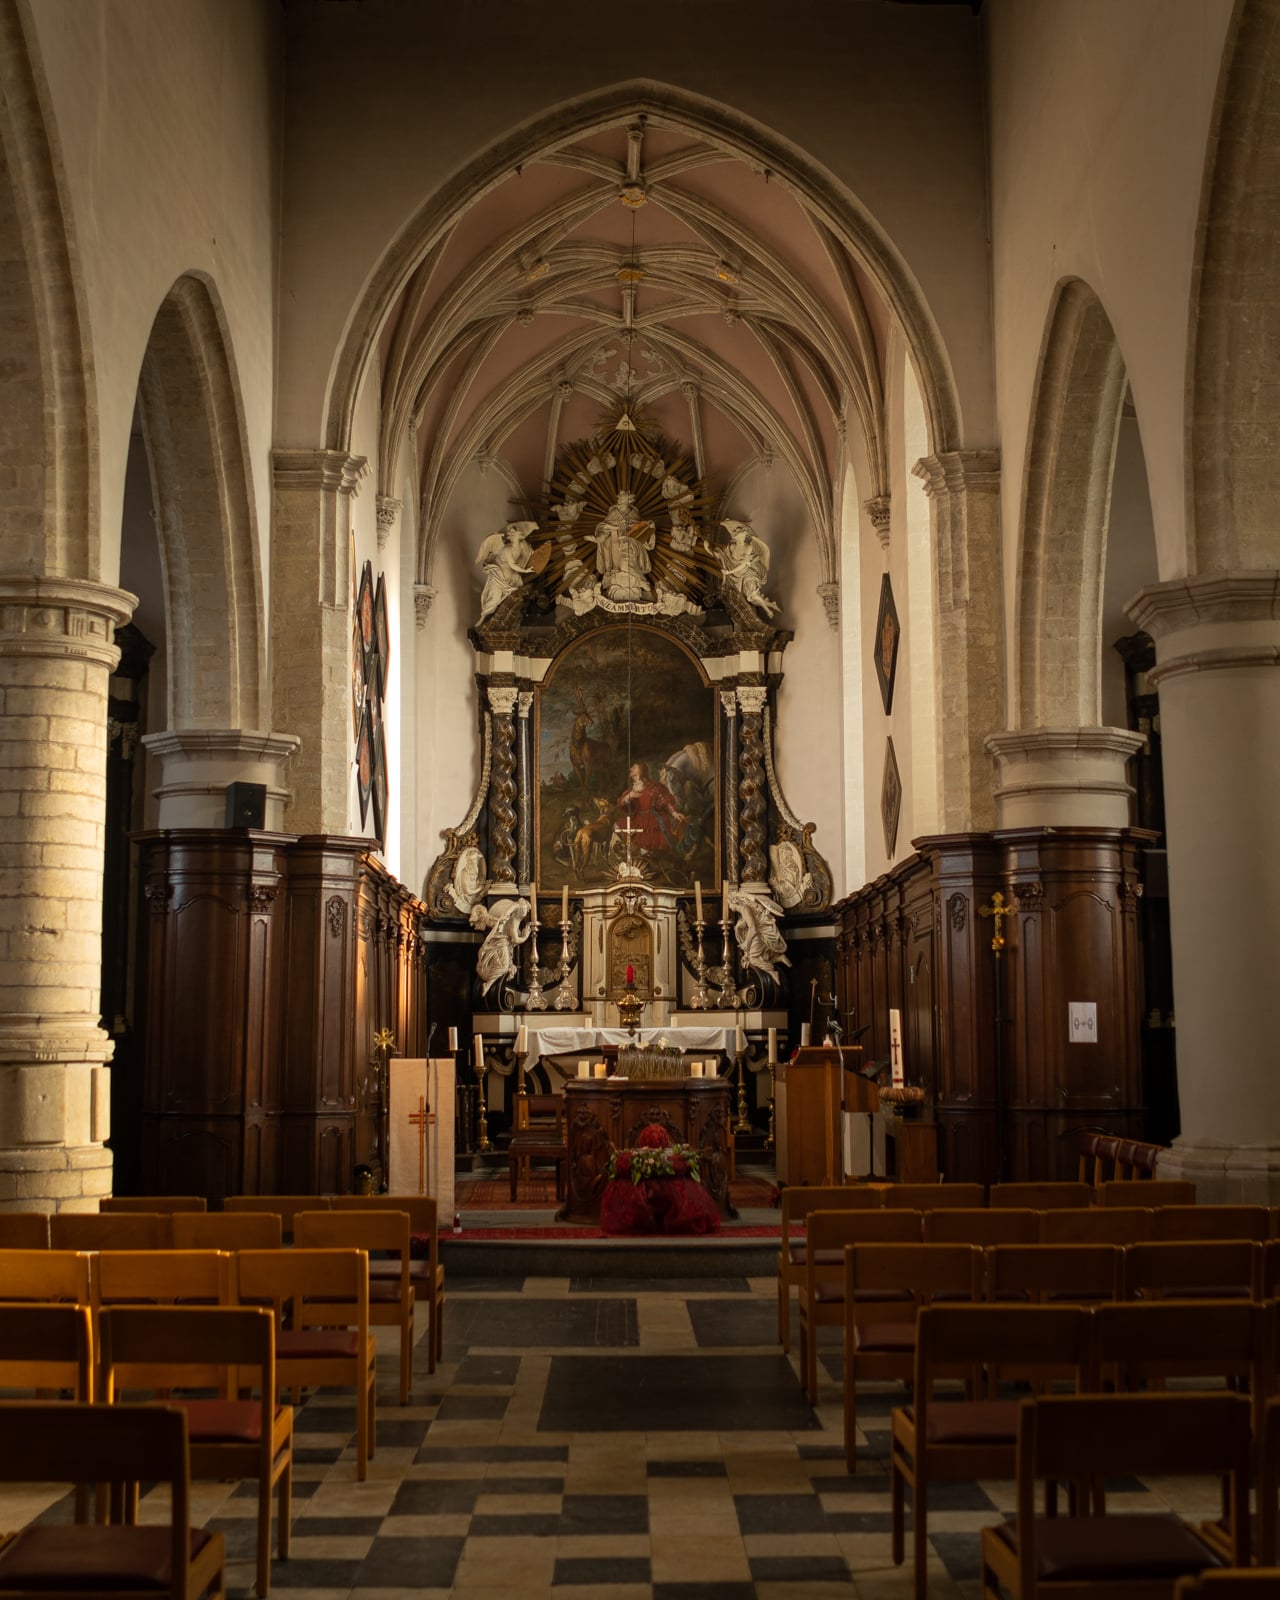 Interior of St. Lambertus Church, Leefdaal, Belgium.